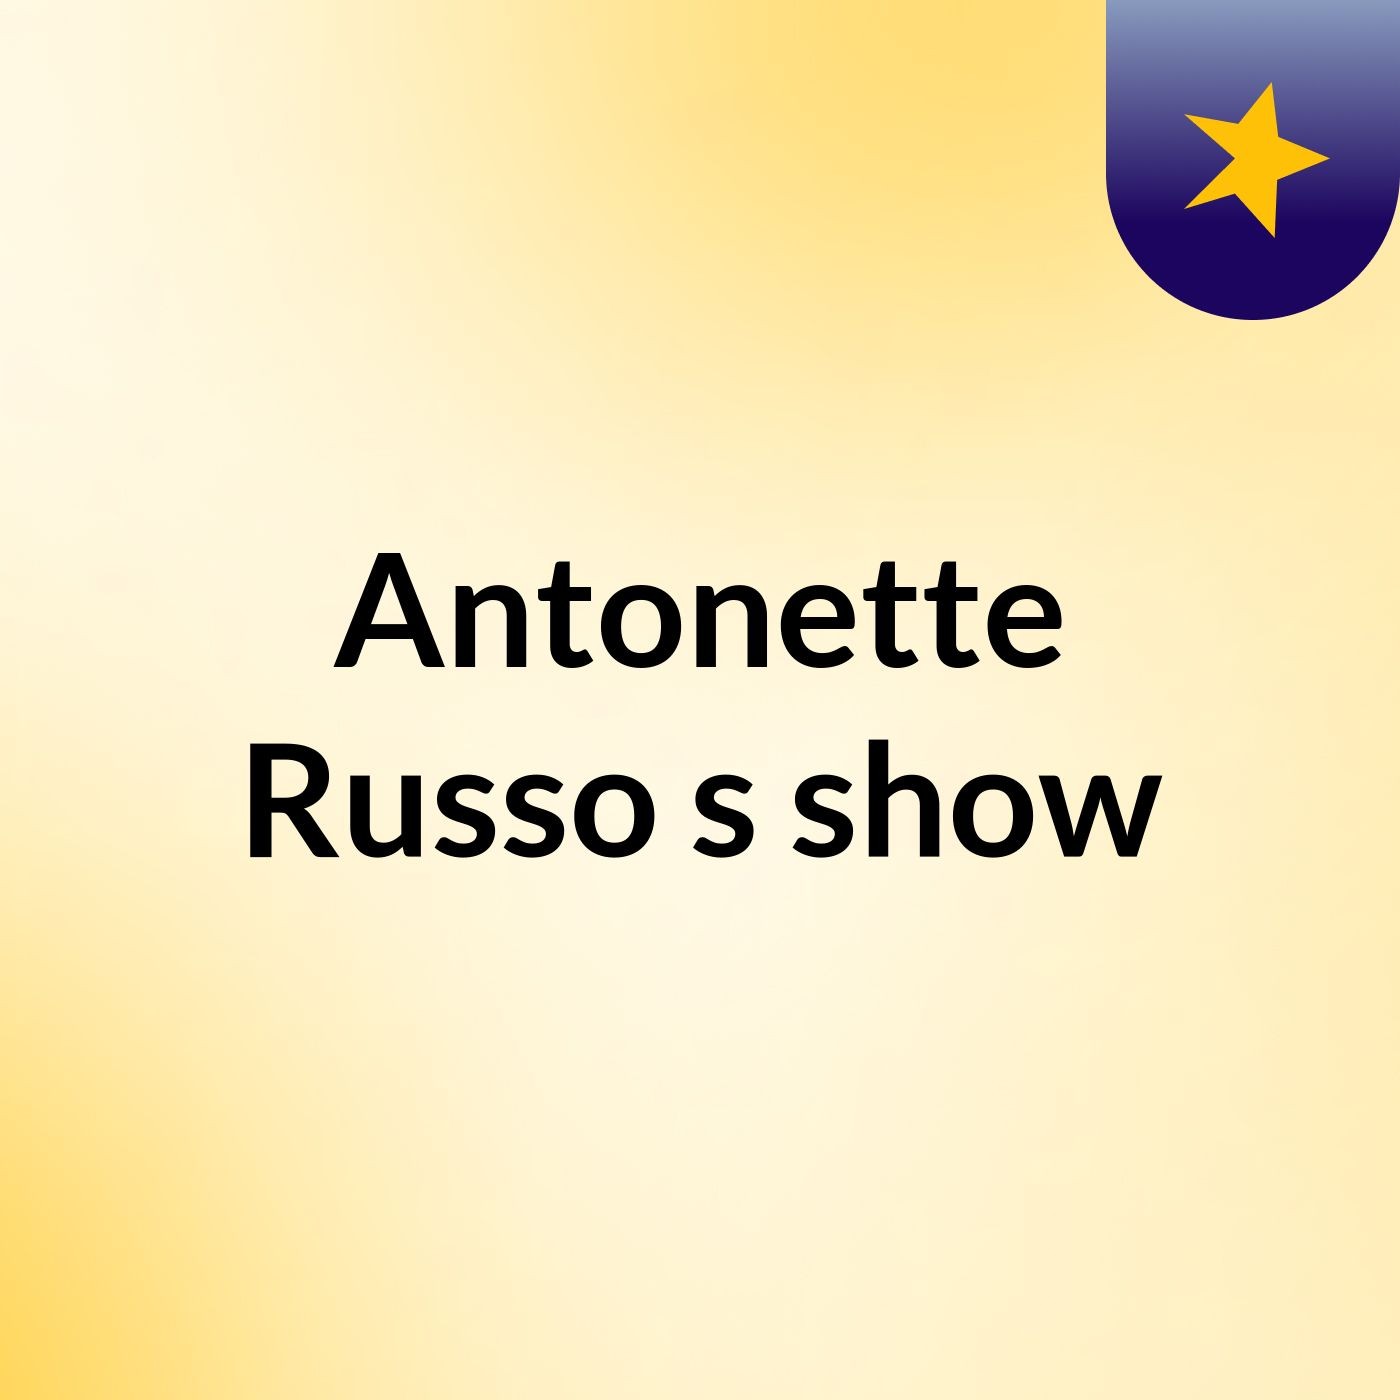 Antonette Russo's show